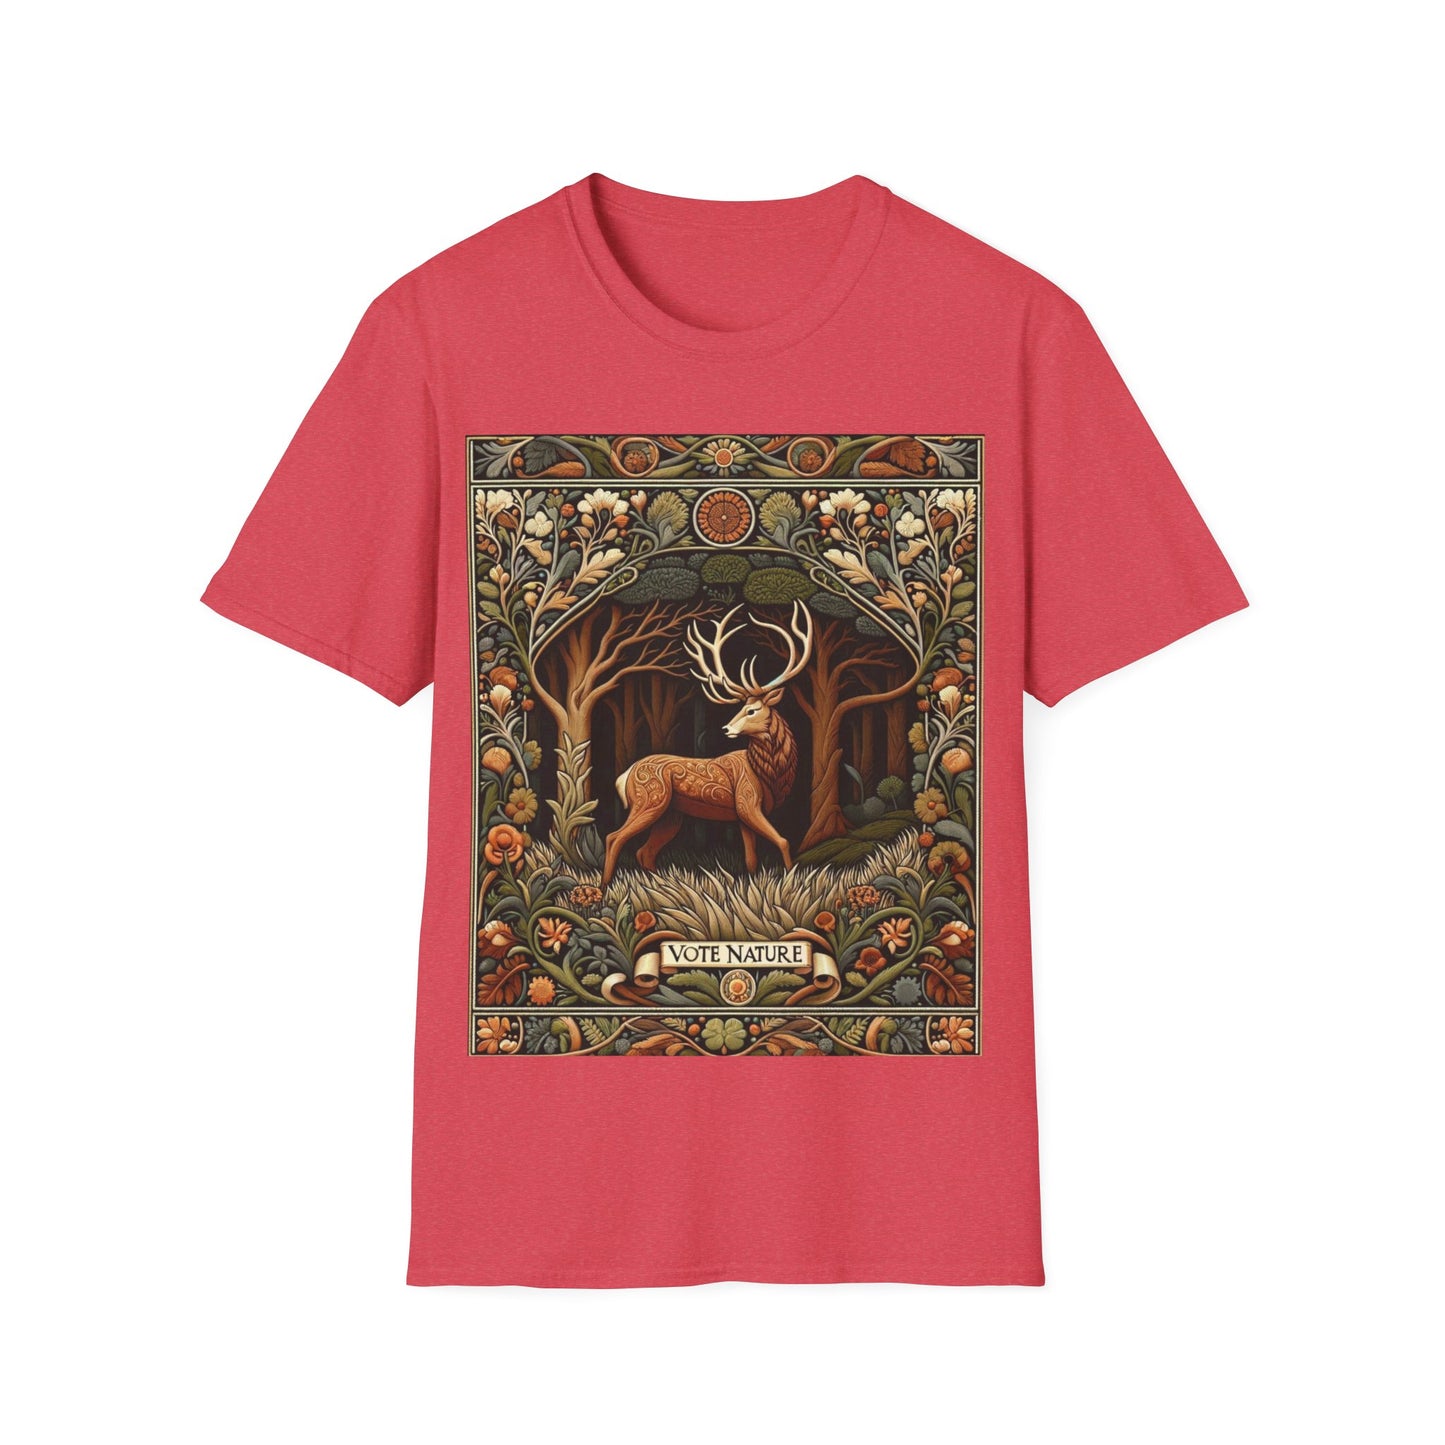 Inspirational Statment T-Shirt: Vote Nature! William Morris Inspired